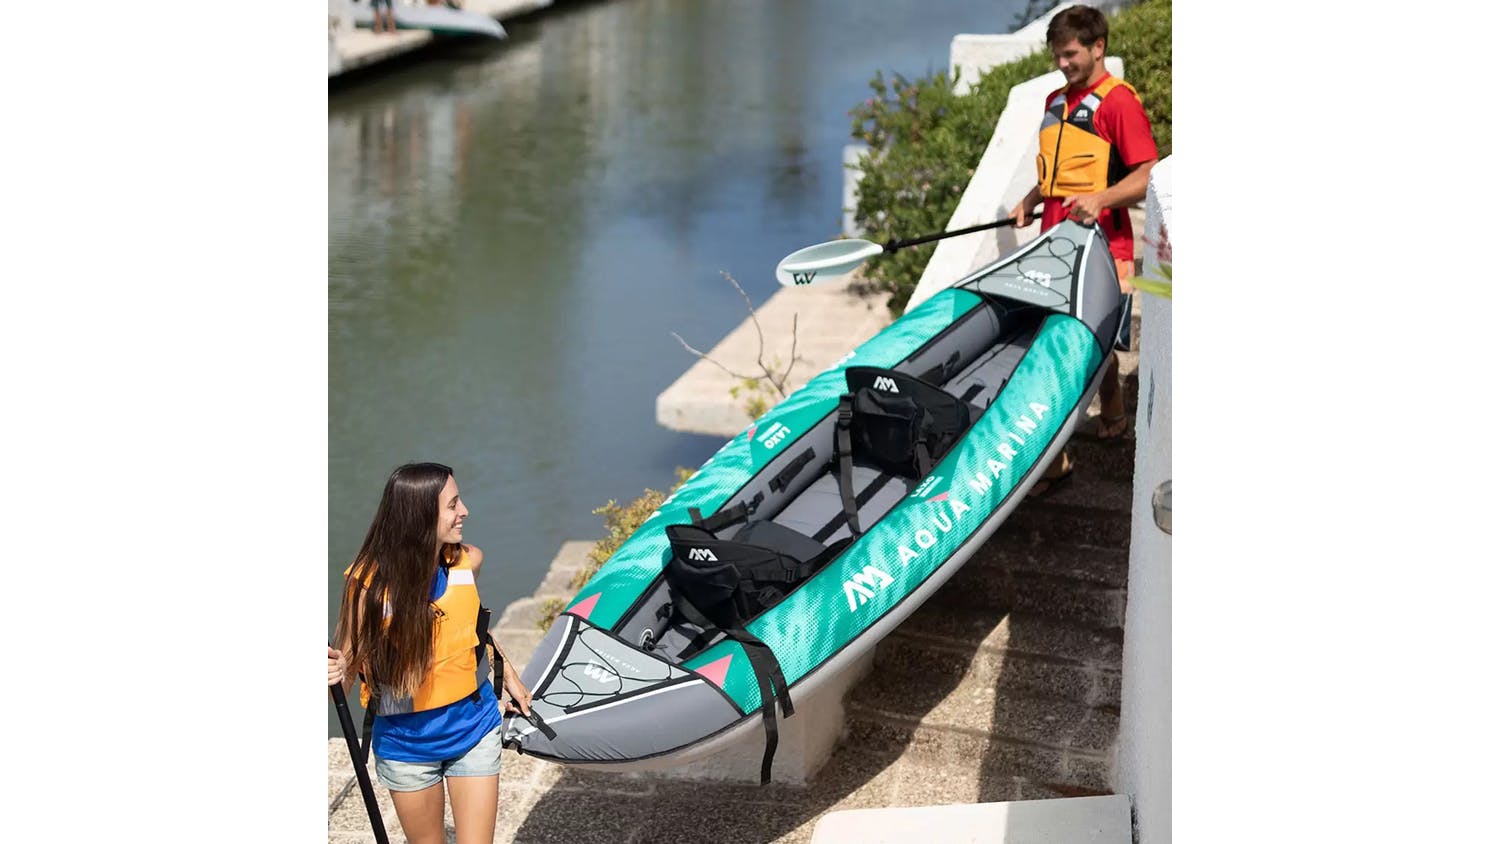 Aqua Marina Laxo-320 Inflatable Kayak - 2 Person